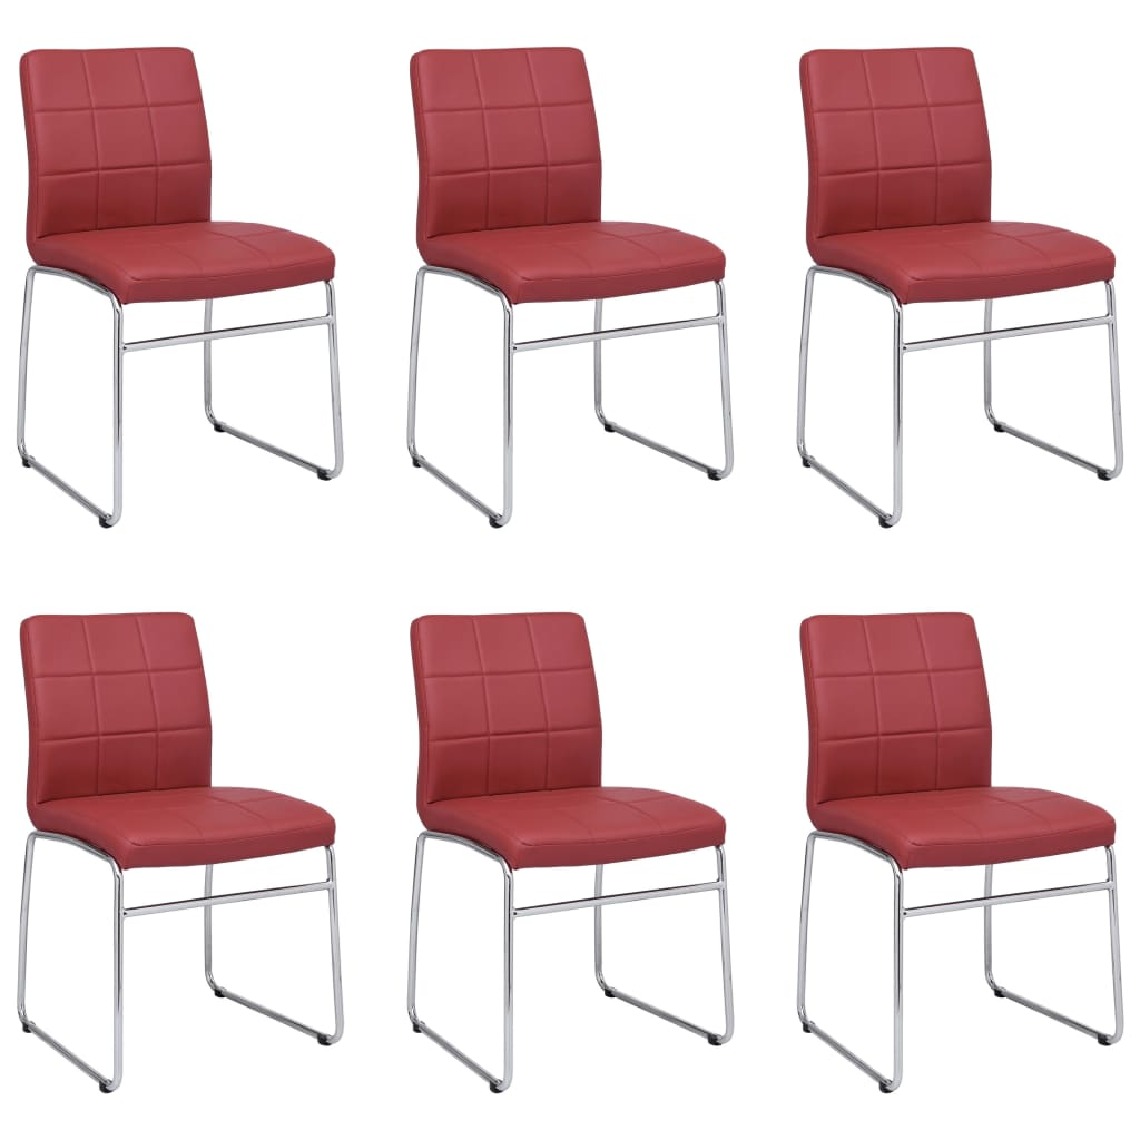 Chunhelife - Chunhelife Chaises de salle à manger 6 pcs Rouge Similicuir - Chaises